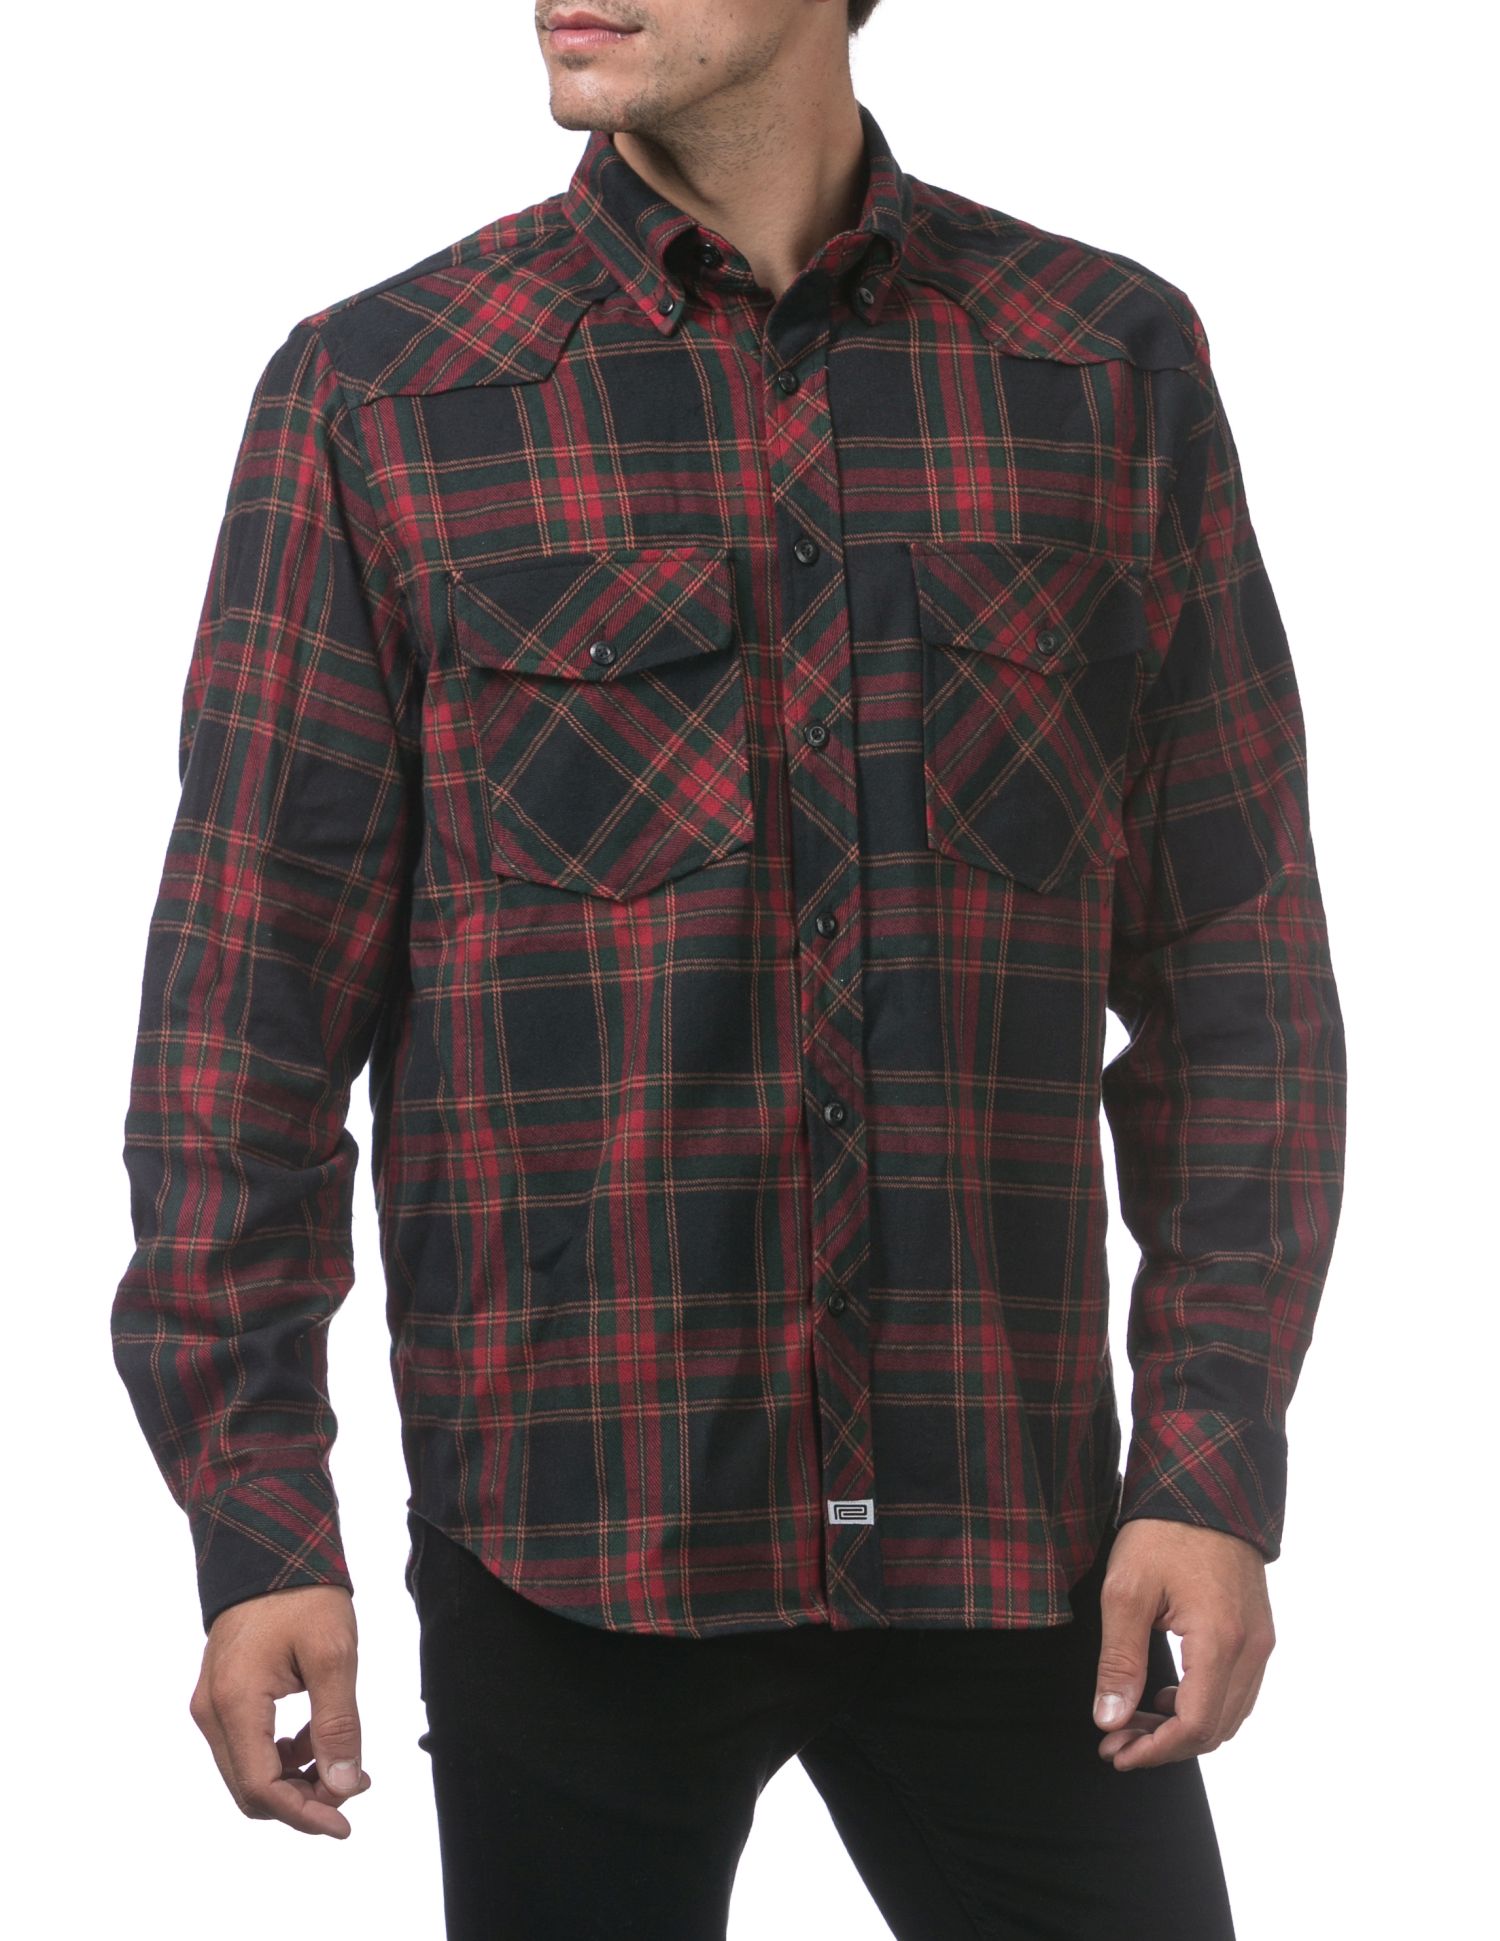 151 #3)BUG/RED/D.GRN Plaid Flannel Long Sleeve Shirt - Long Sleeve Tee